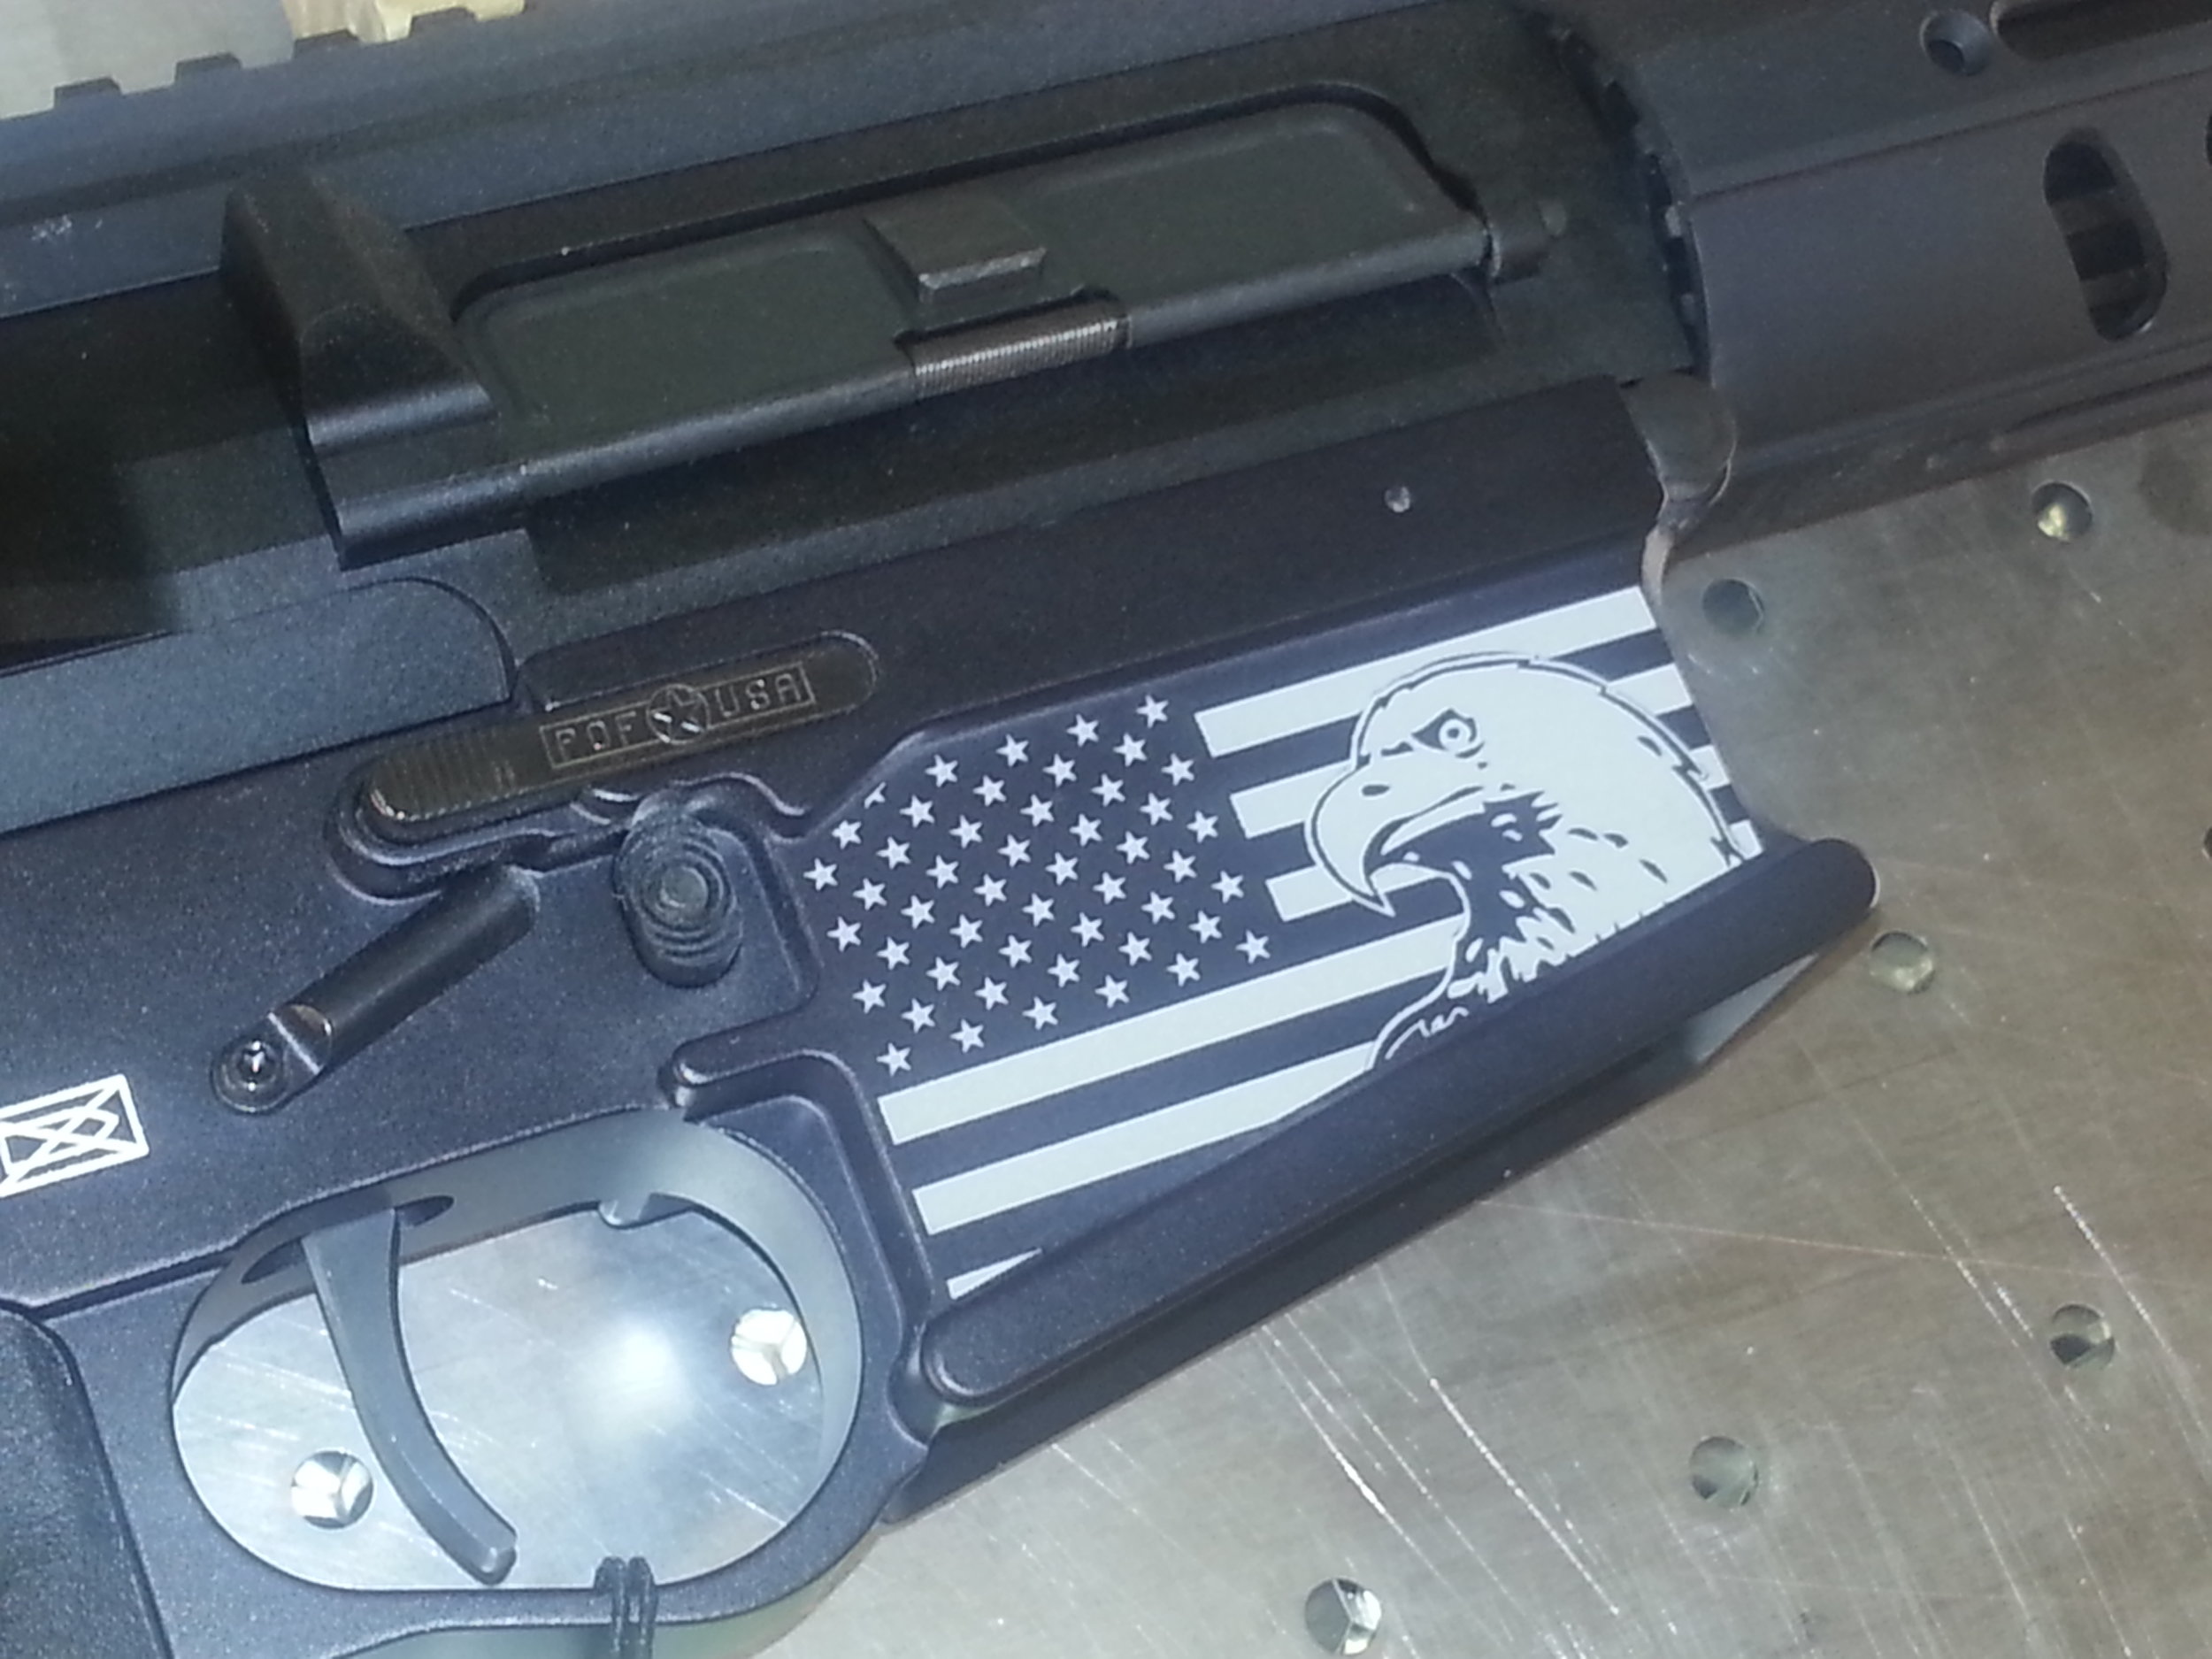 Copy of Custom Engraved Assault Rifle - Personalized Assault Rifle - Firearm Projects from Engrave It Houston